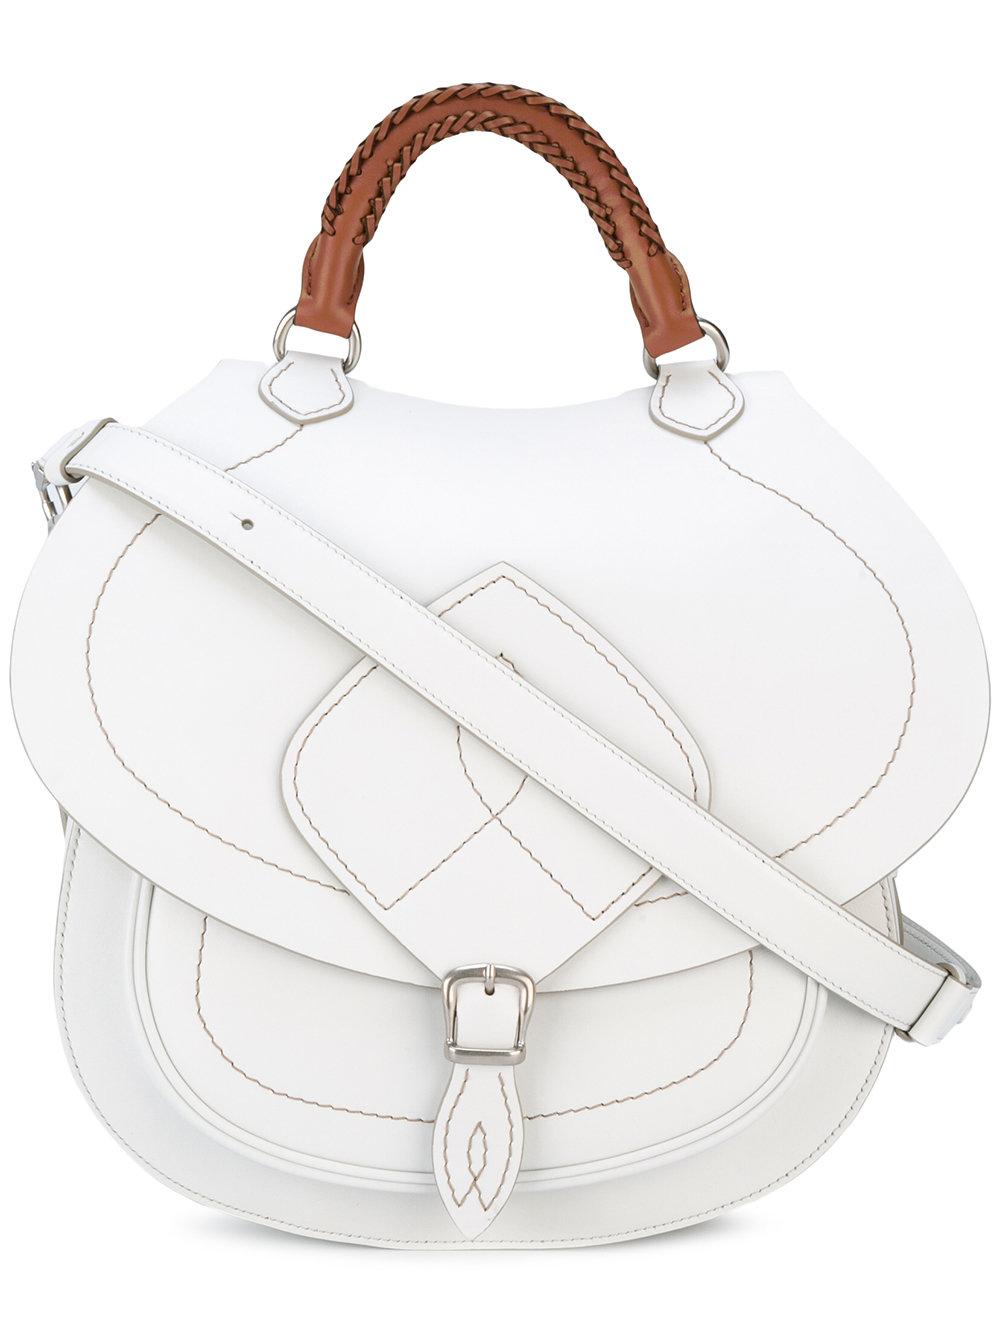 Maison margiela Top Handle Saddle Bag in White | Lyst